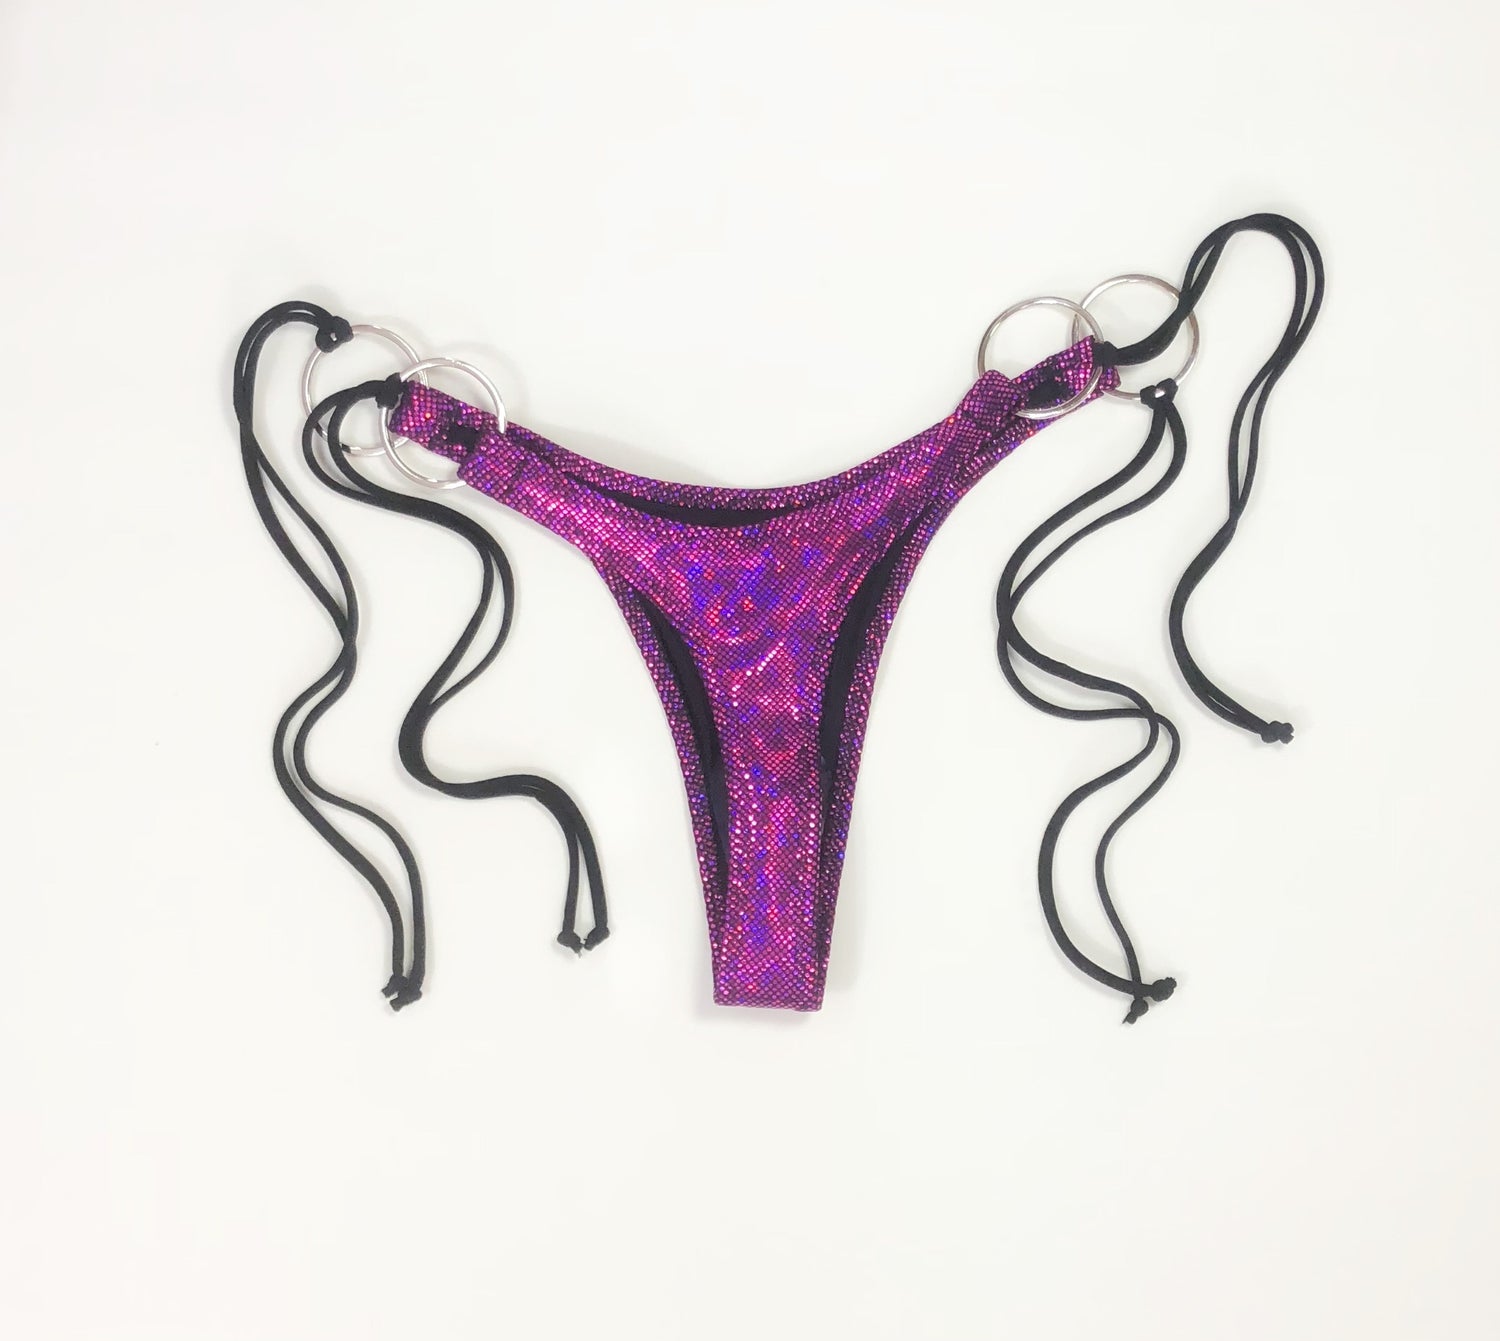 wendolin-designs - Wendolin Designs - Bikini bottom - Bikini Set - Color Purple Holographic - Big rings